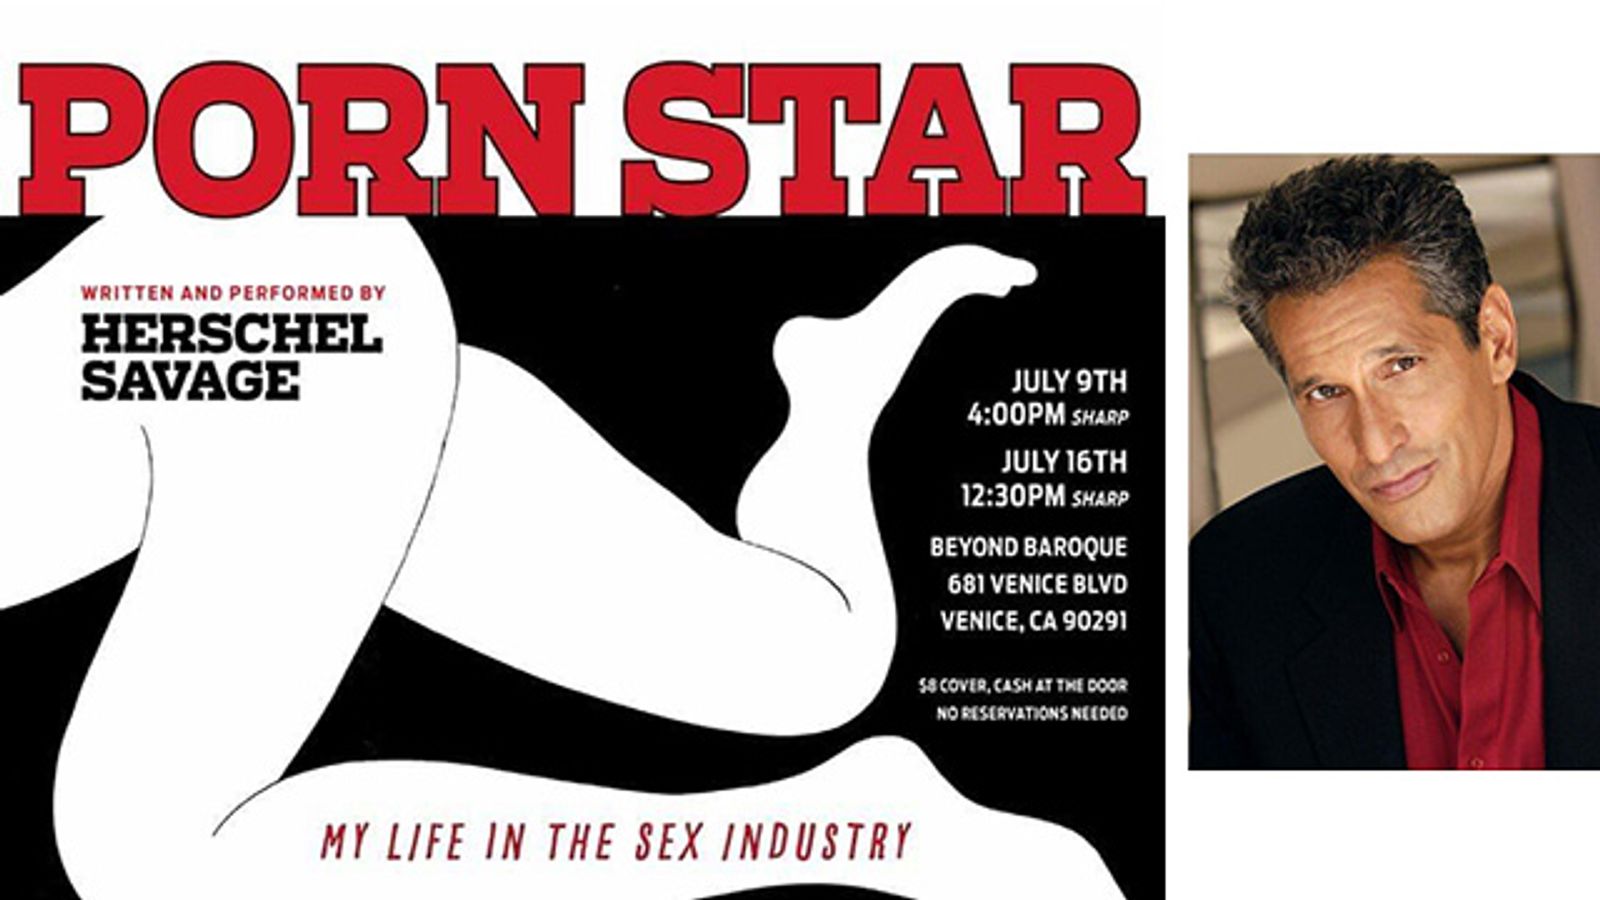 Herschel Savage Solo Play 'Porn Star' Opens This Weekend